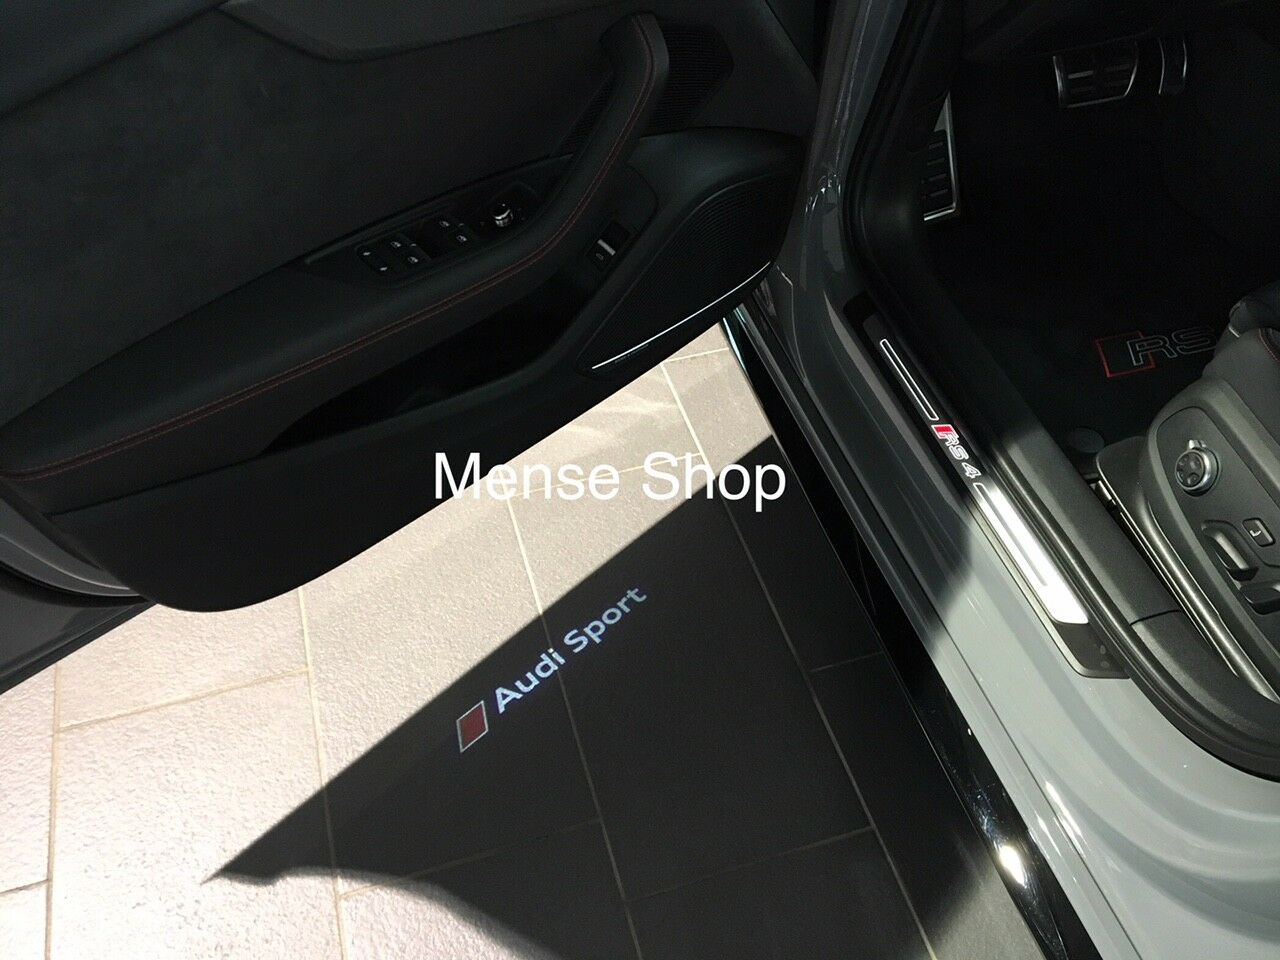  Audi collection 3291900400 Audi Magnetset